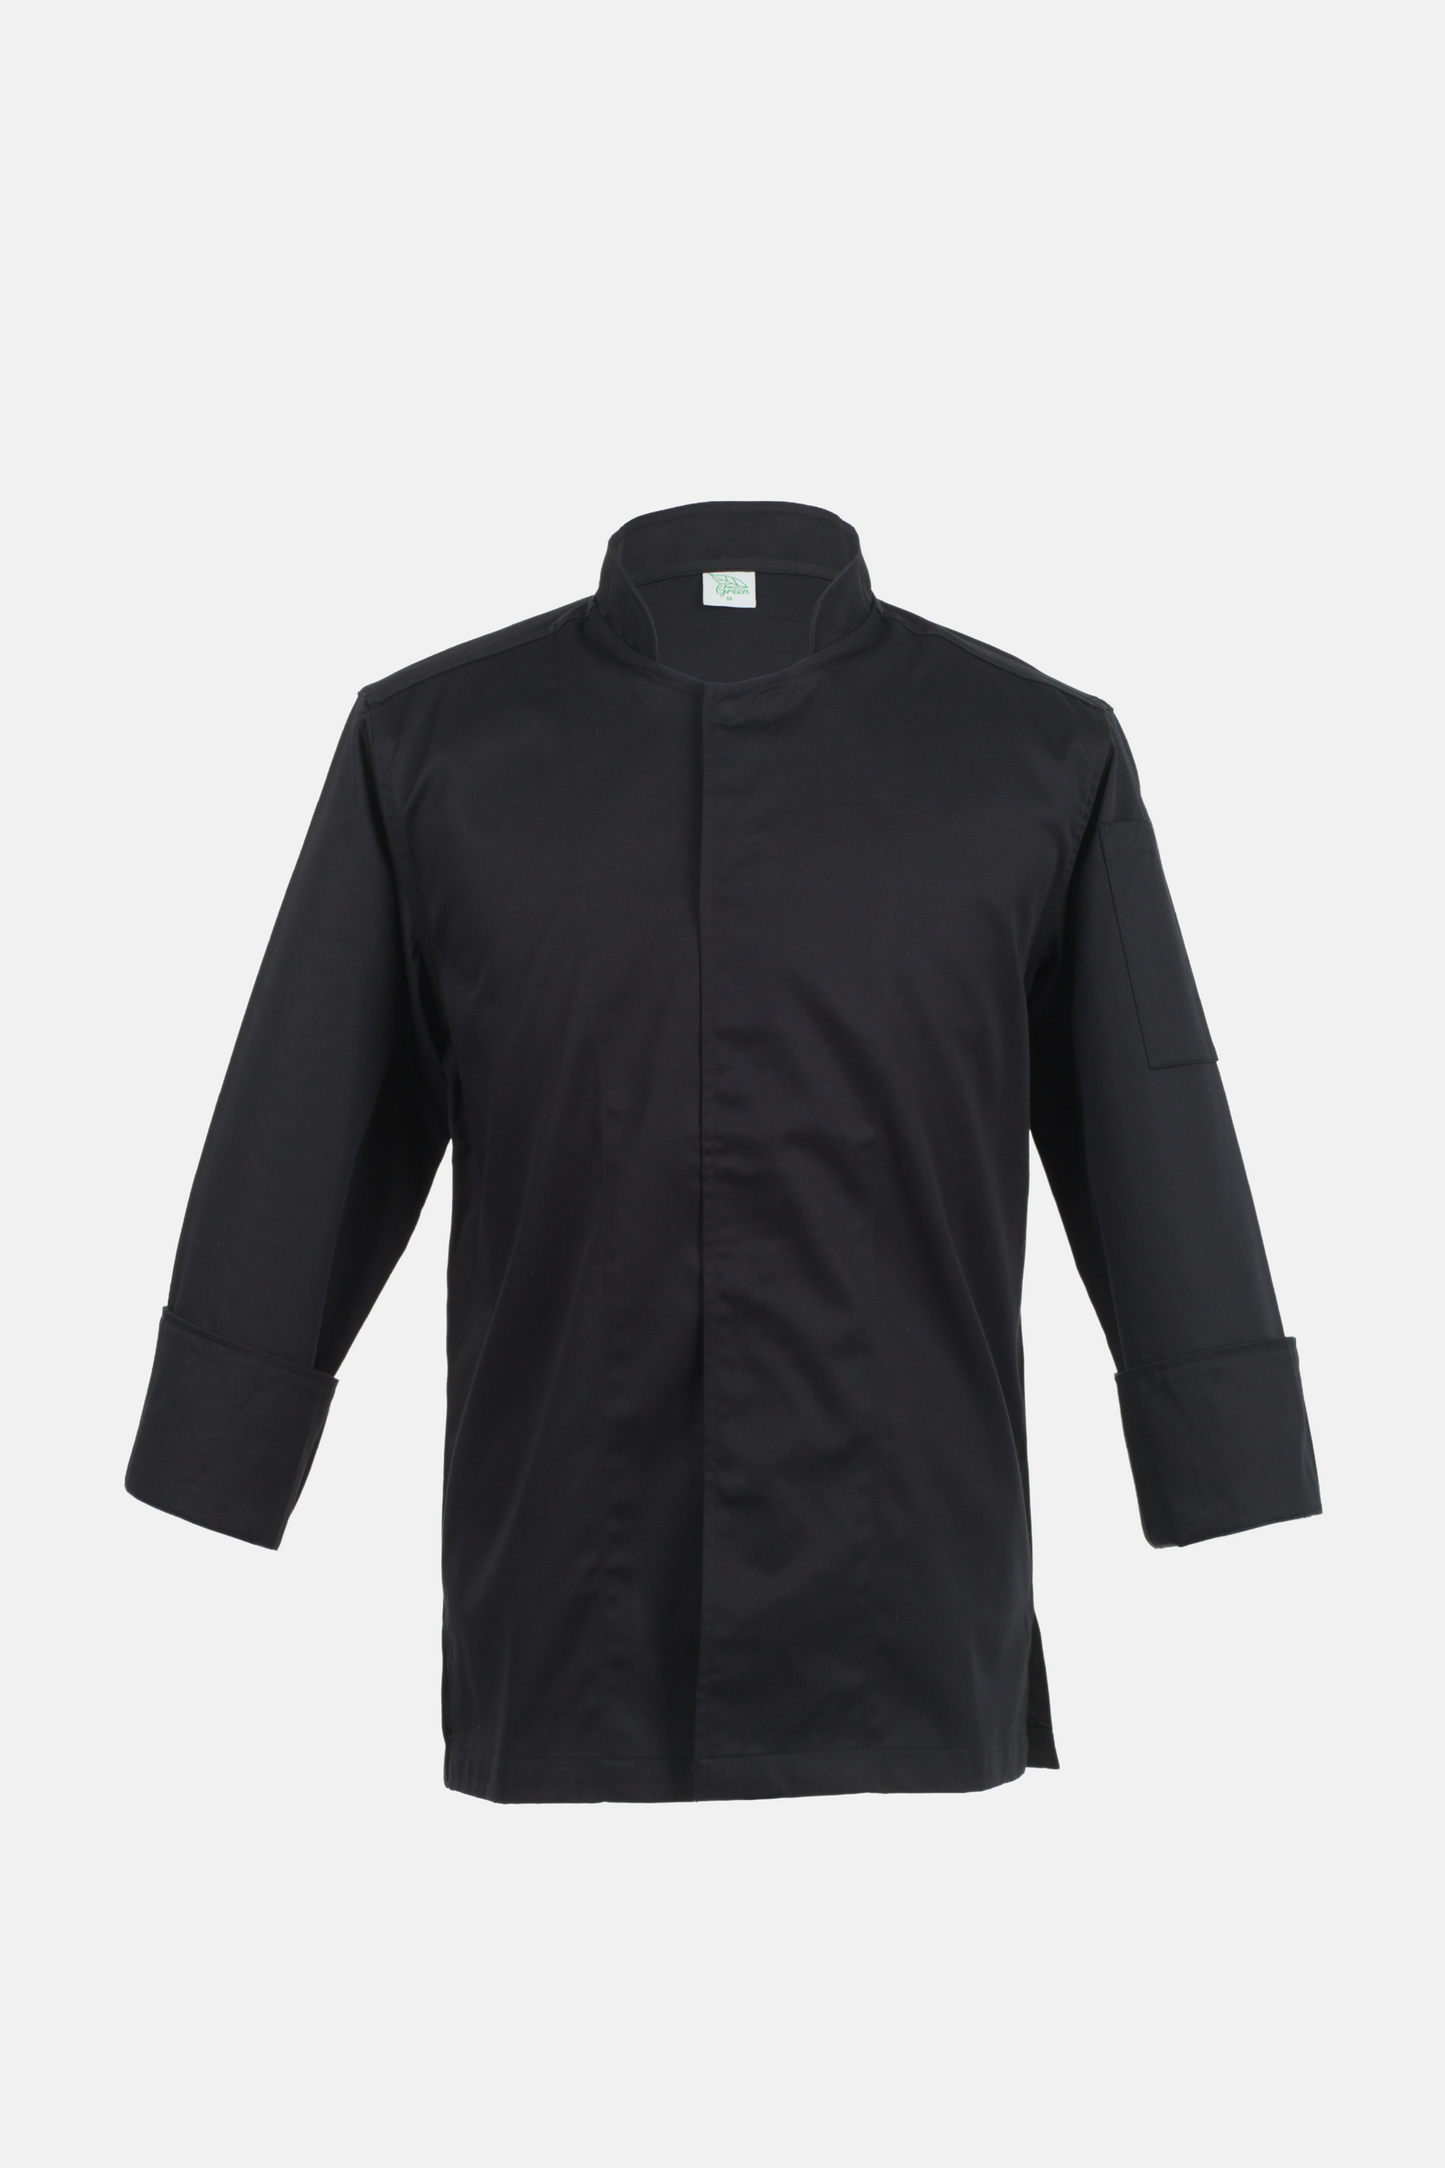 Acuba black long sleeve chef jacket